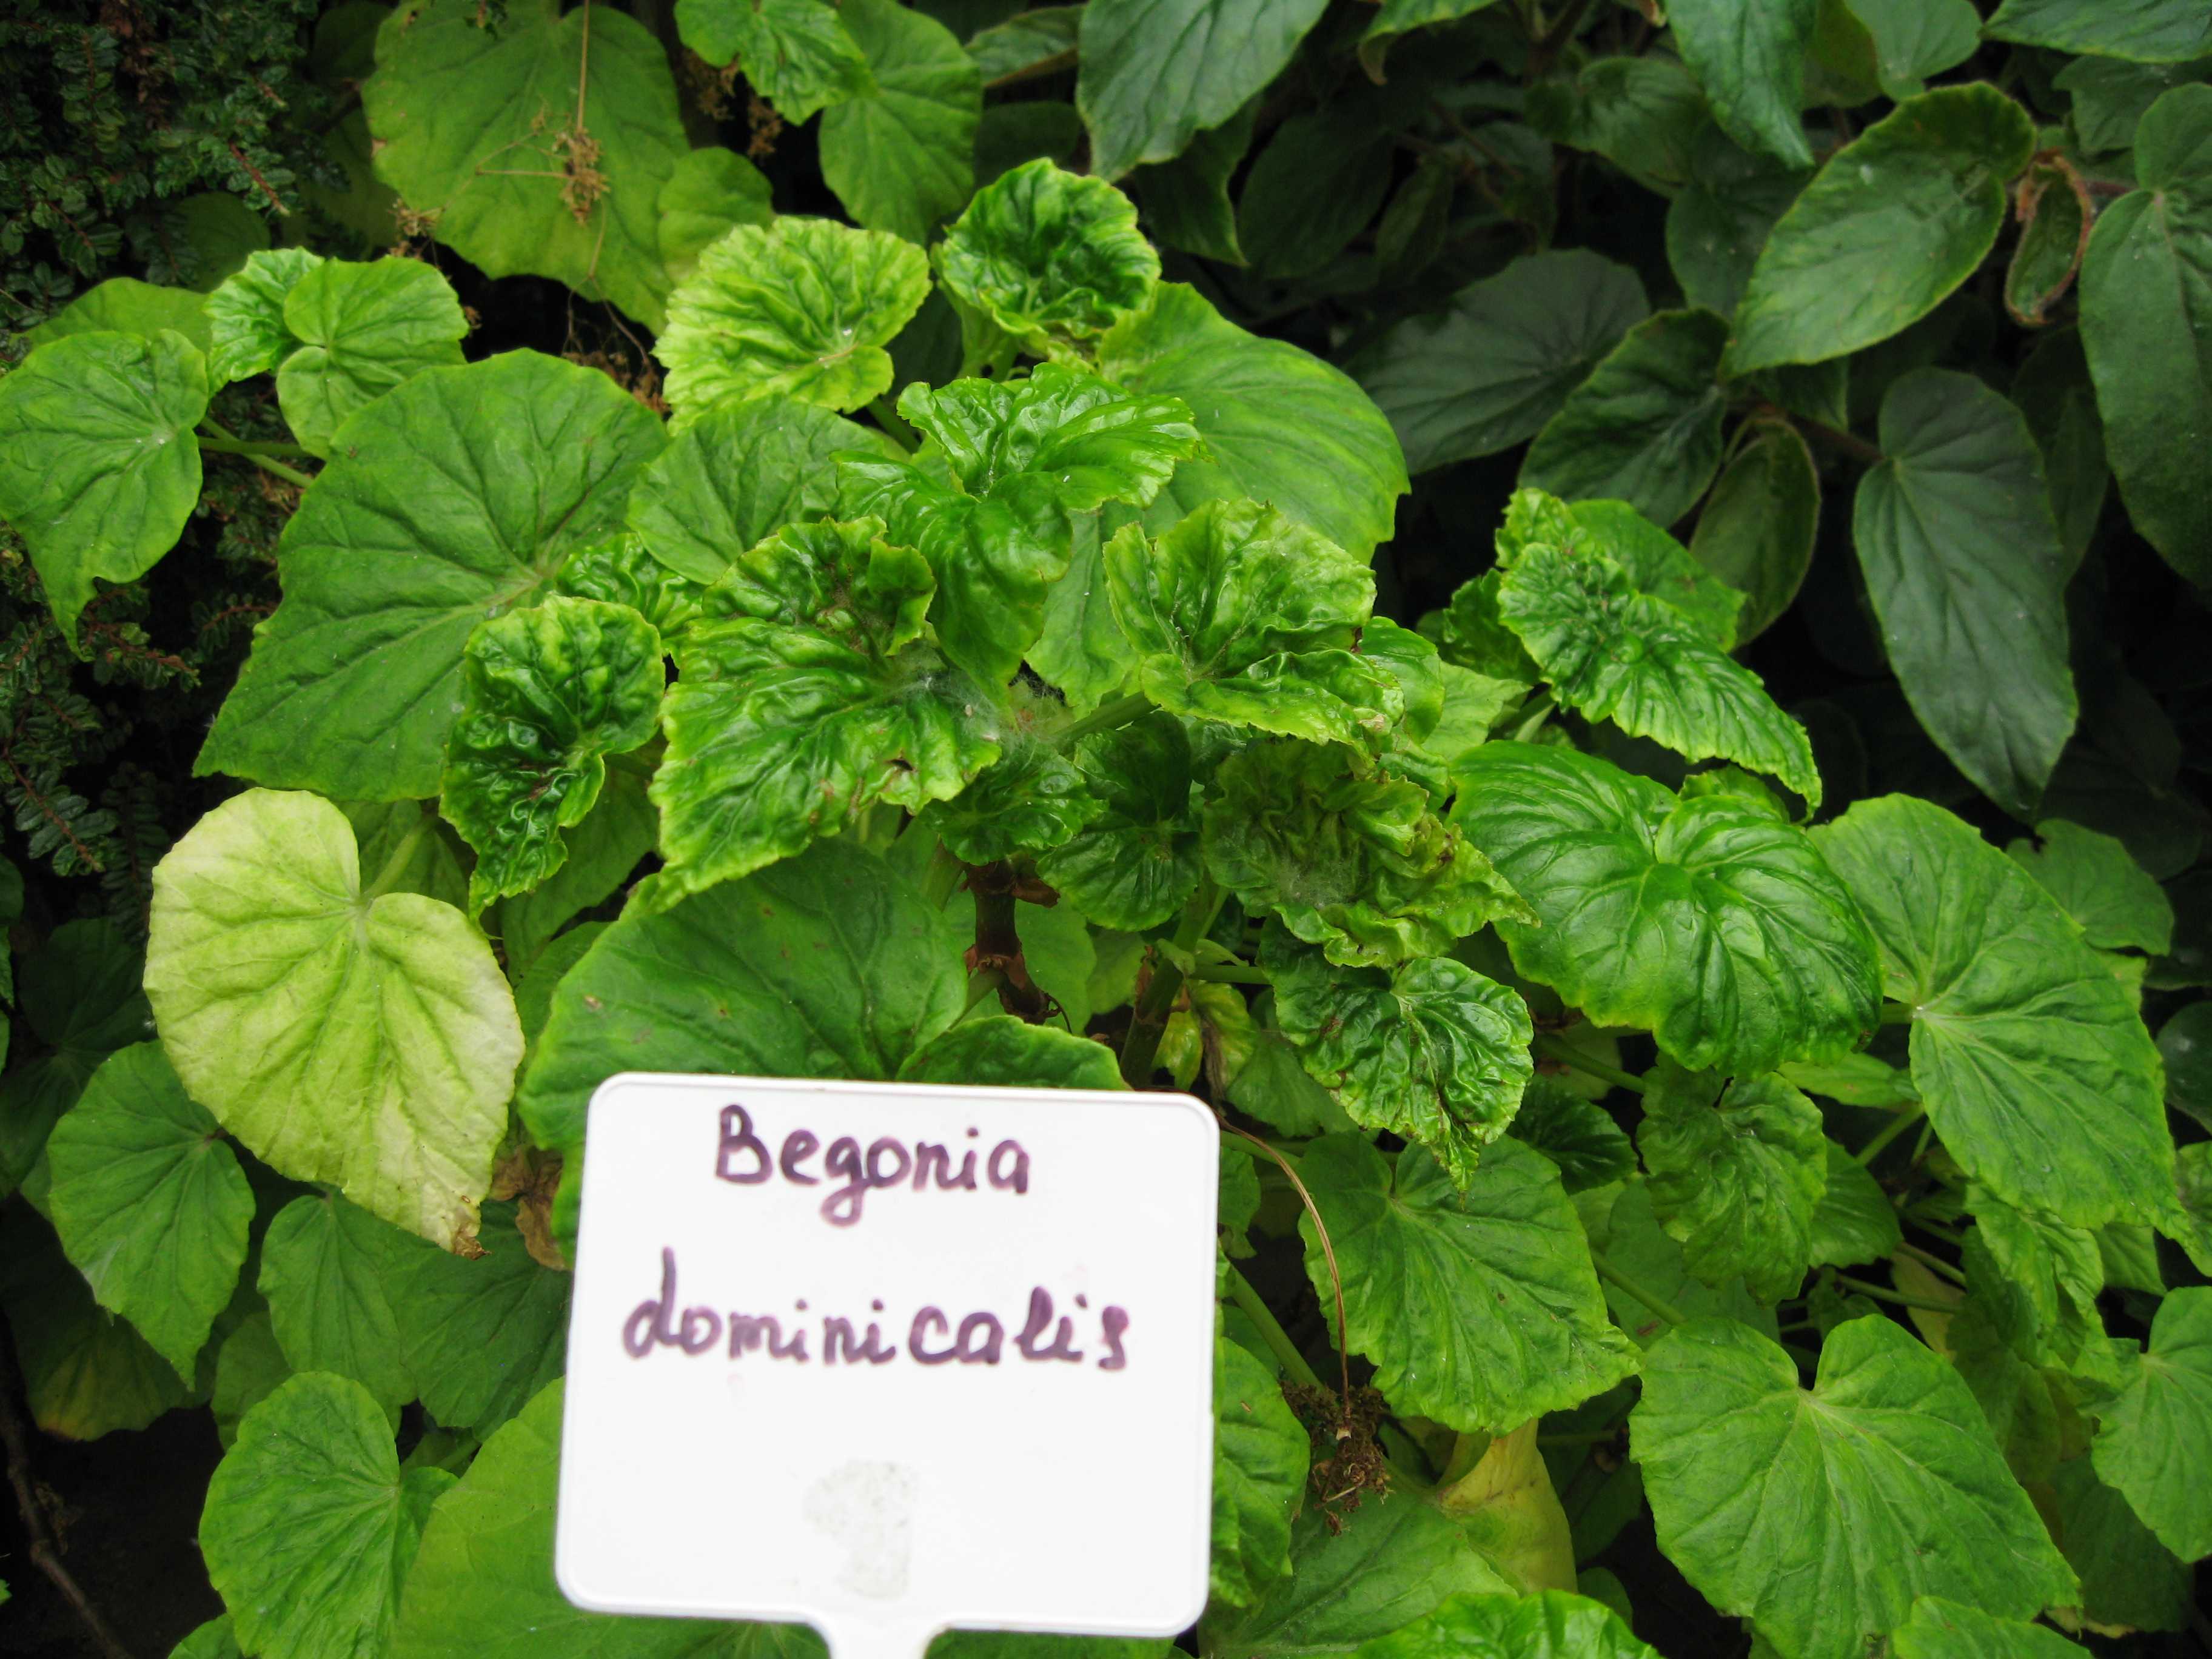 Begonia dominicalis